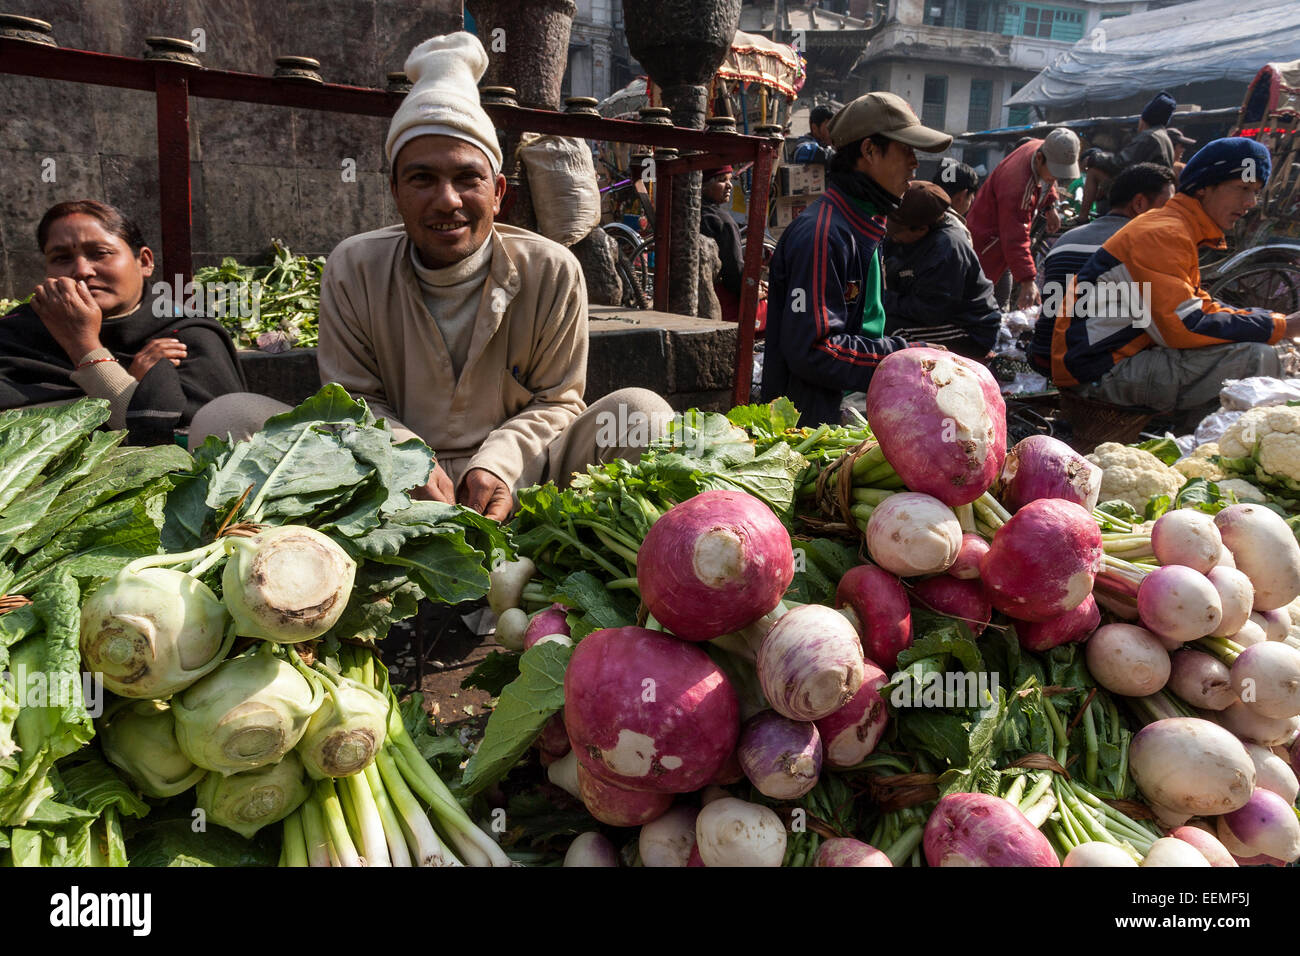 Selling vegetables in the street, vegetable seller, old town, Kathmandu, Nepal Stock Photo